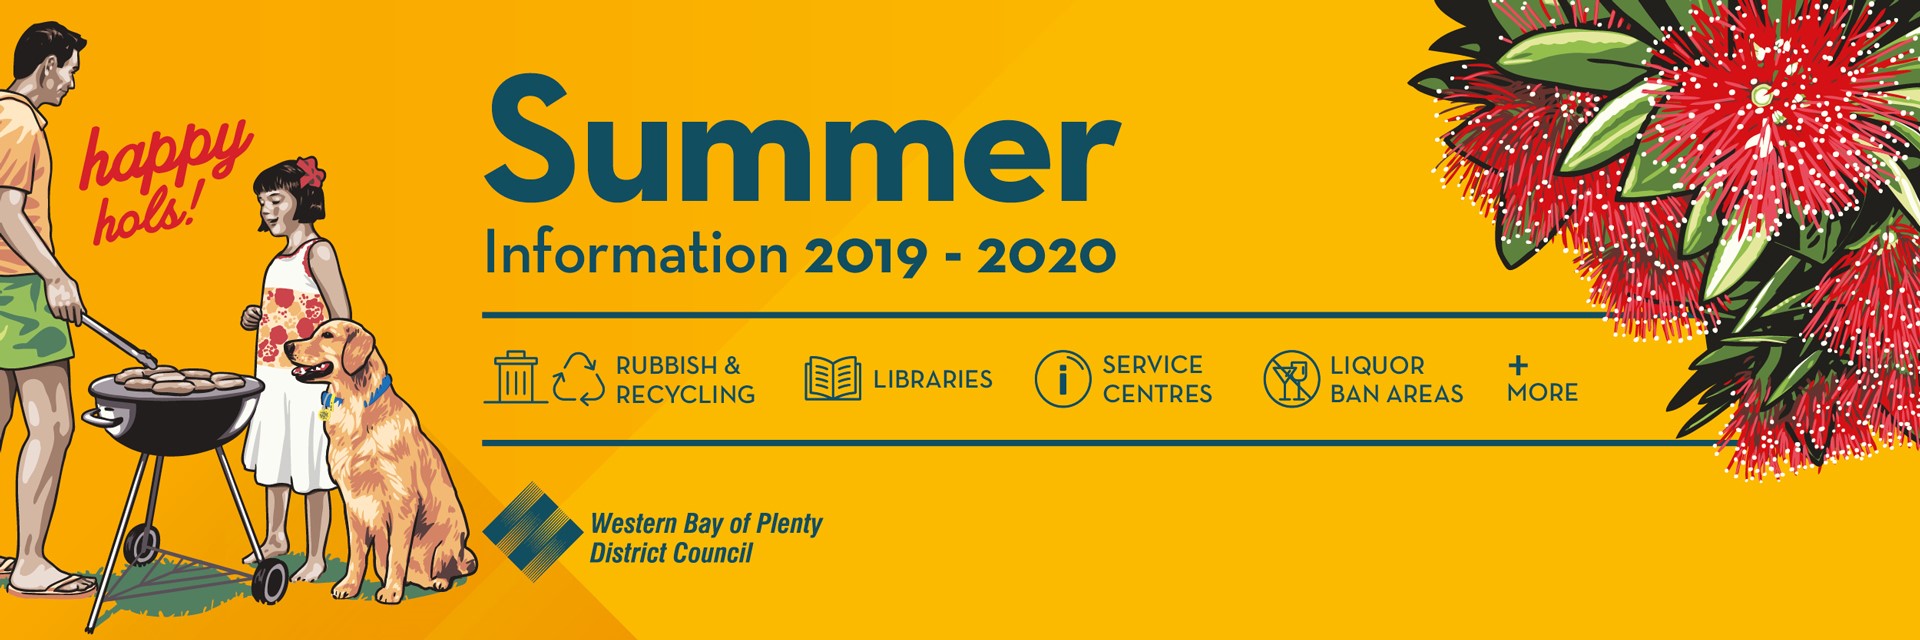 Summer information banner